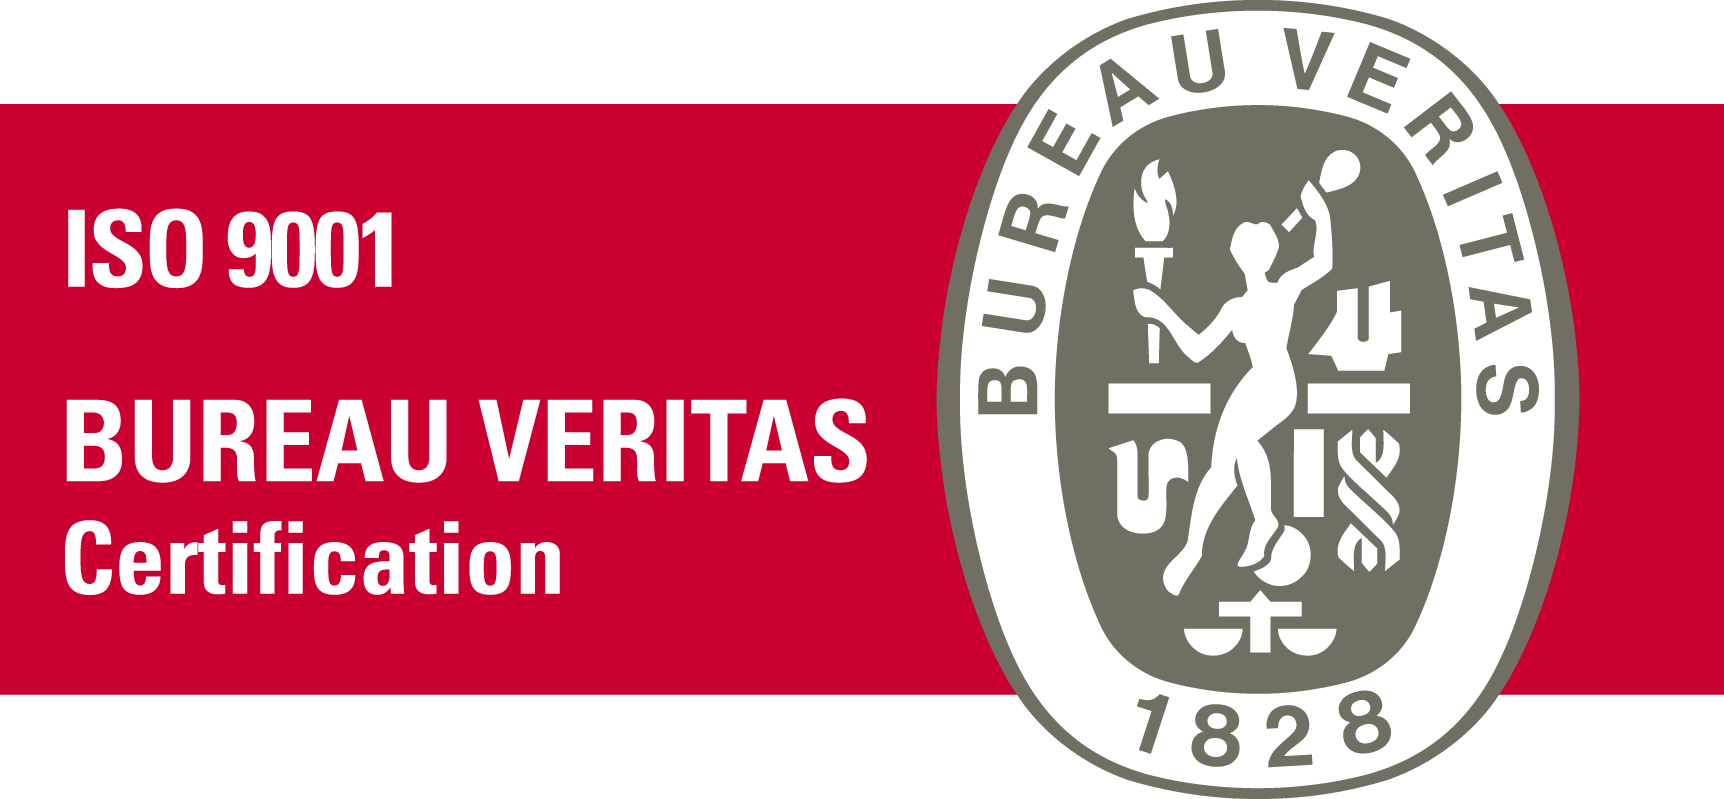 Certificazione ISO 9001 Bureau Veritas - Rotair Spa